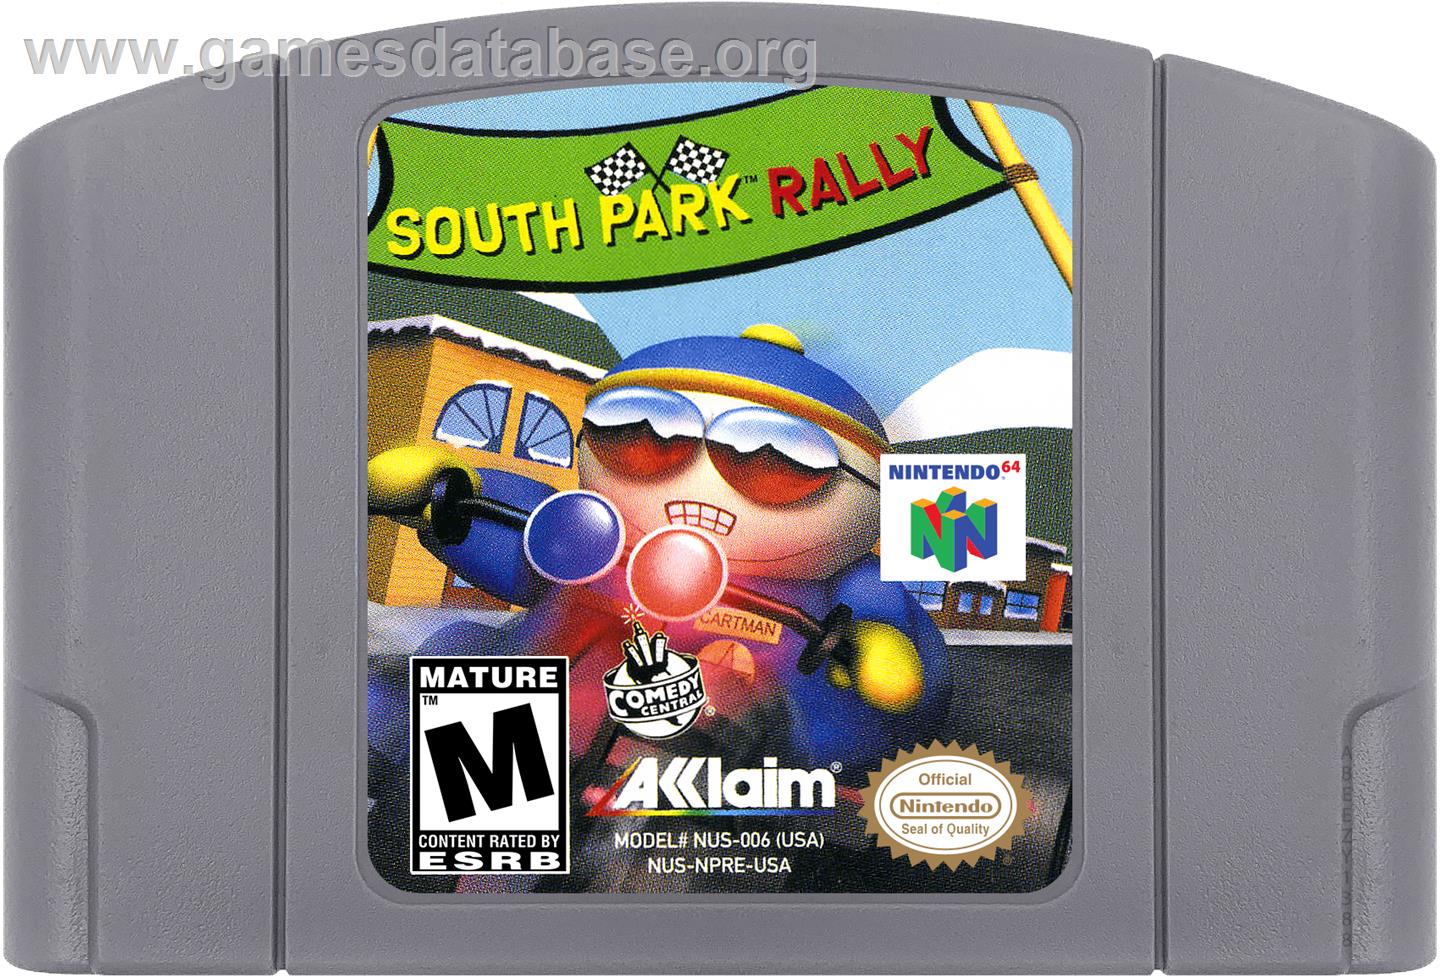 South Park Rally - Nintendo N64 - Artwork - Cartridge